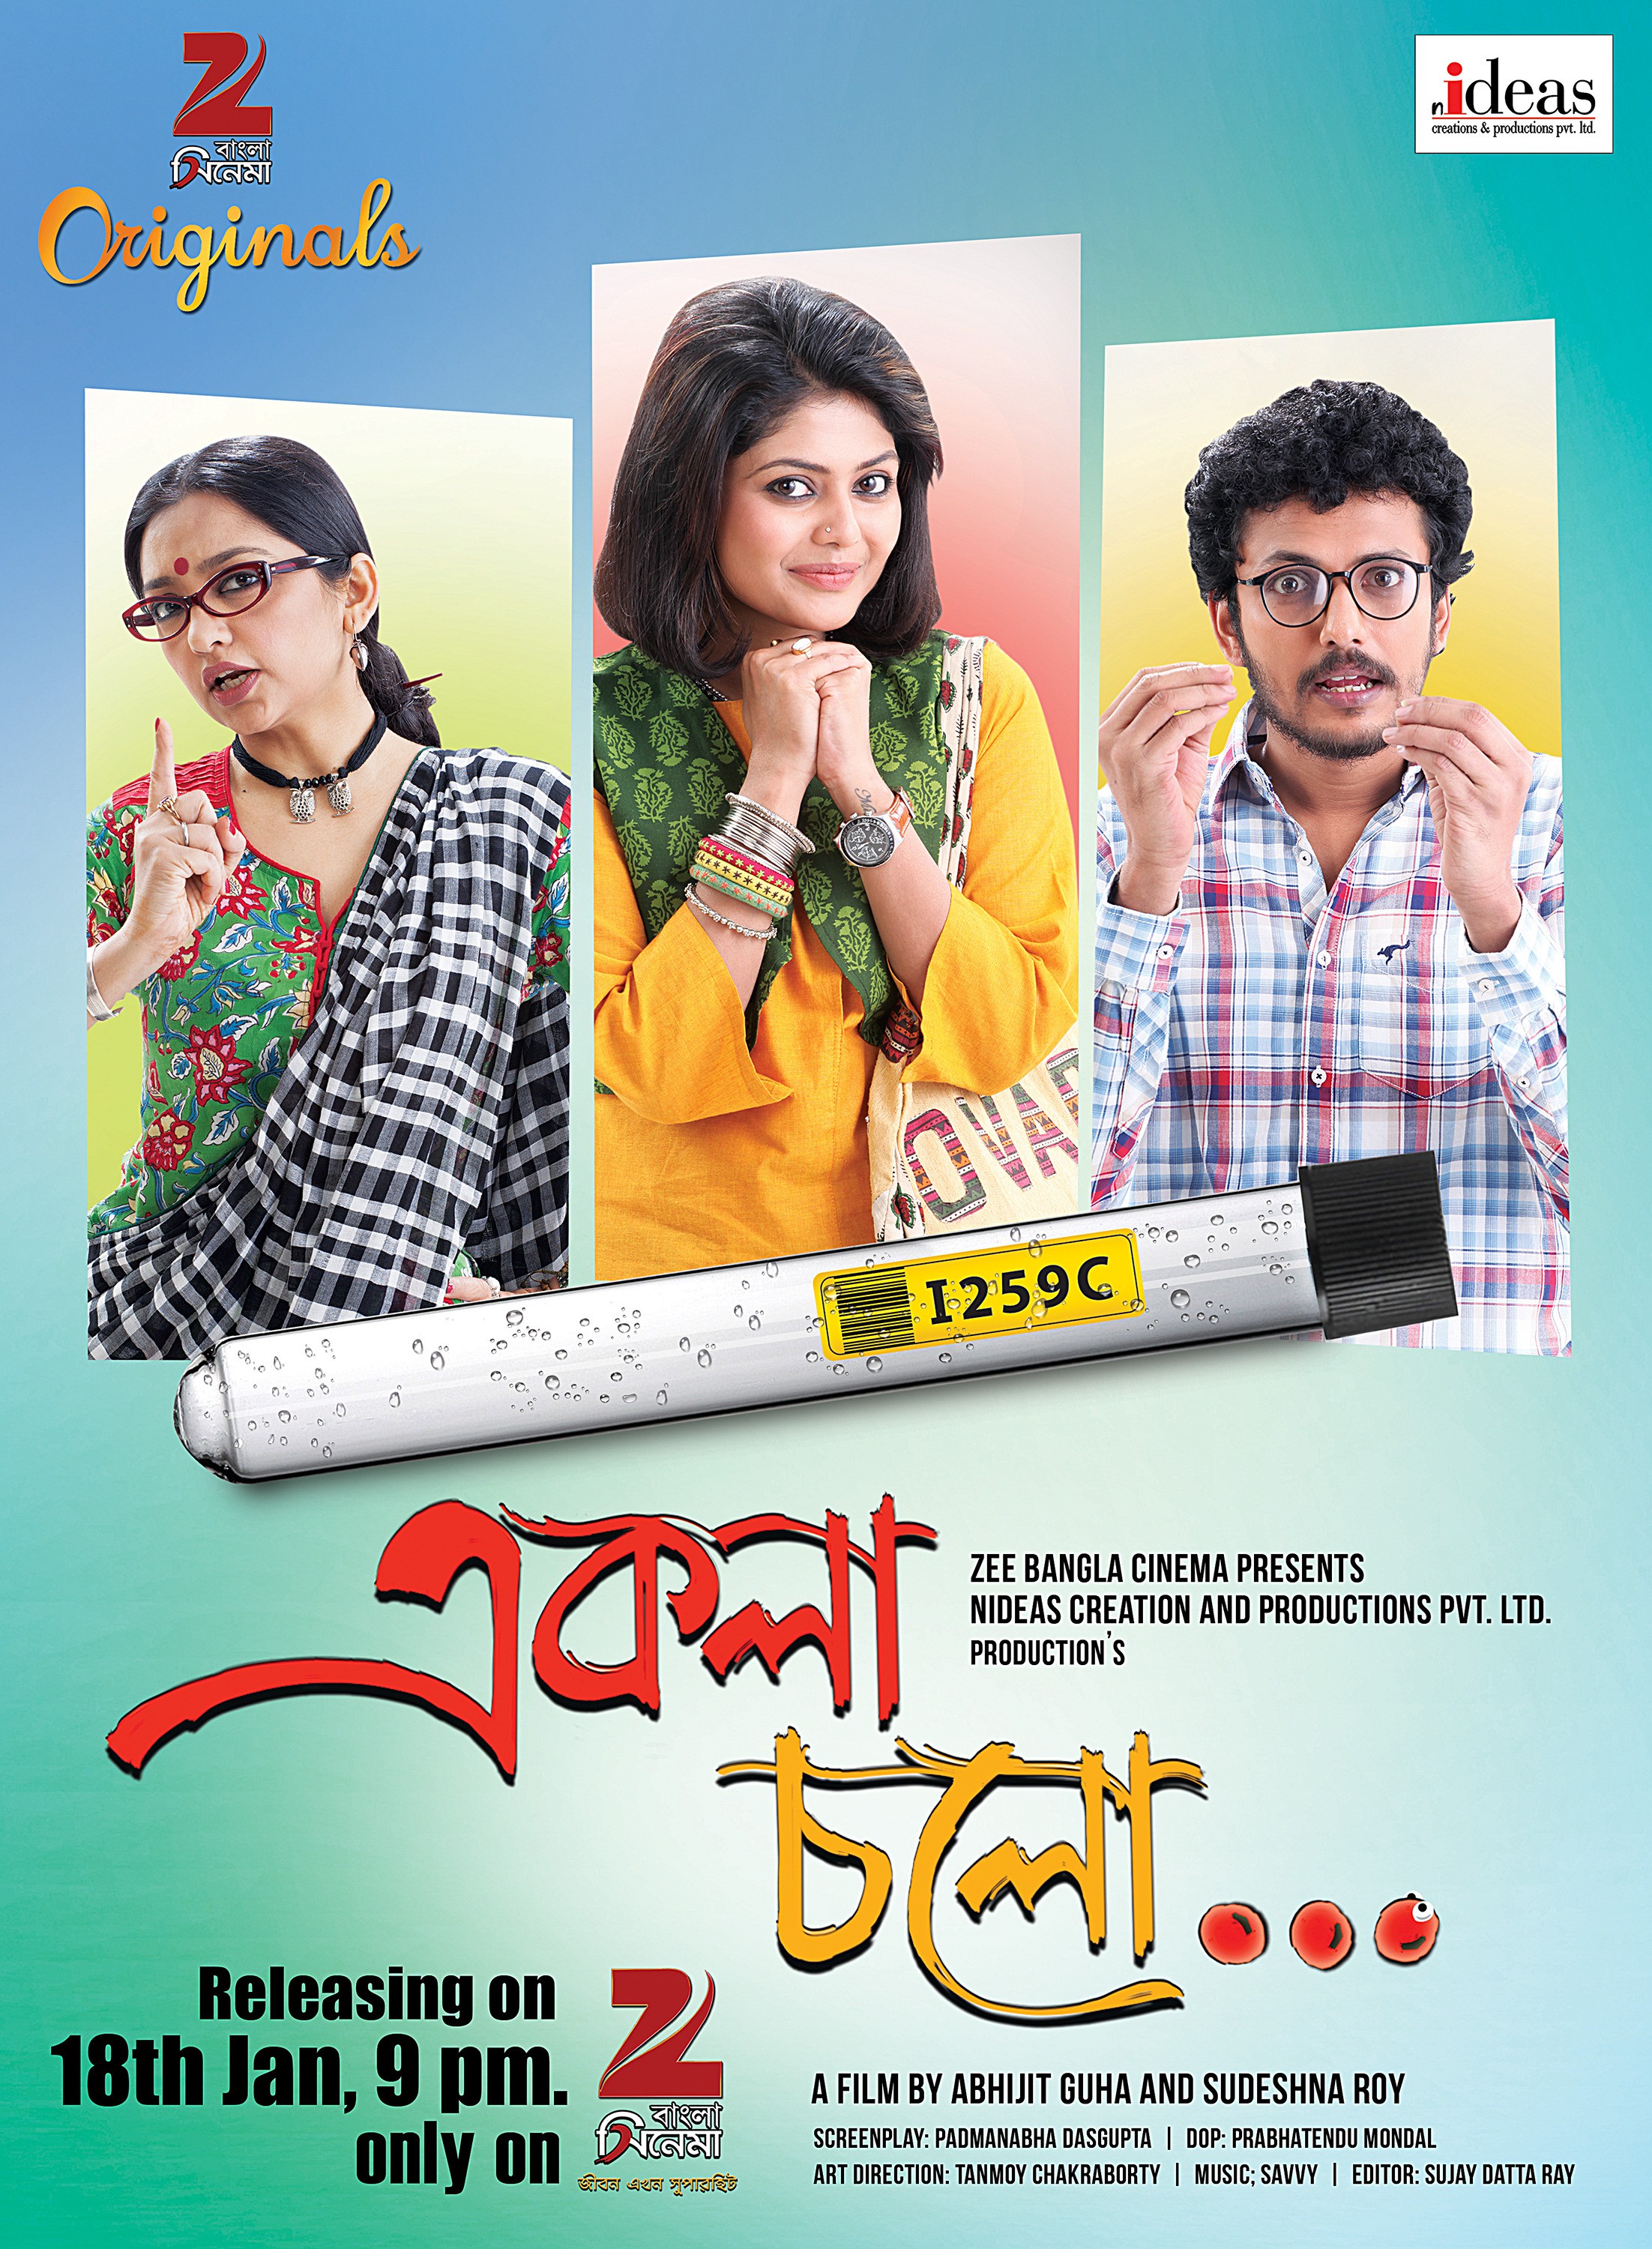 Mega Sized TV Poster Image for Ekla Cholo 